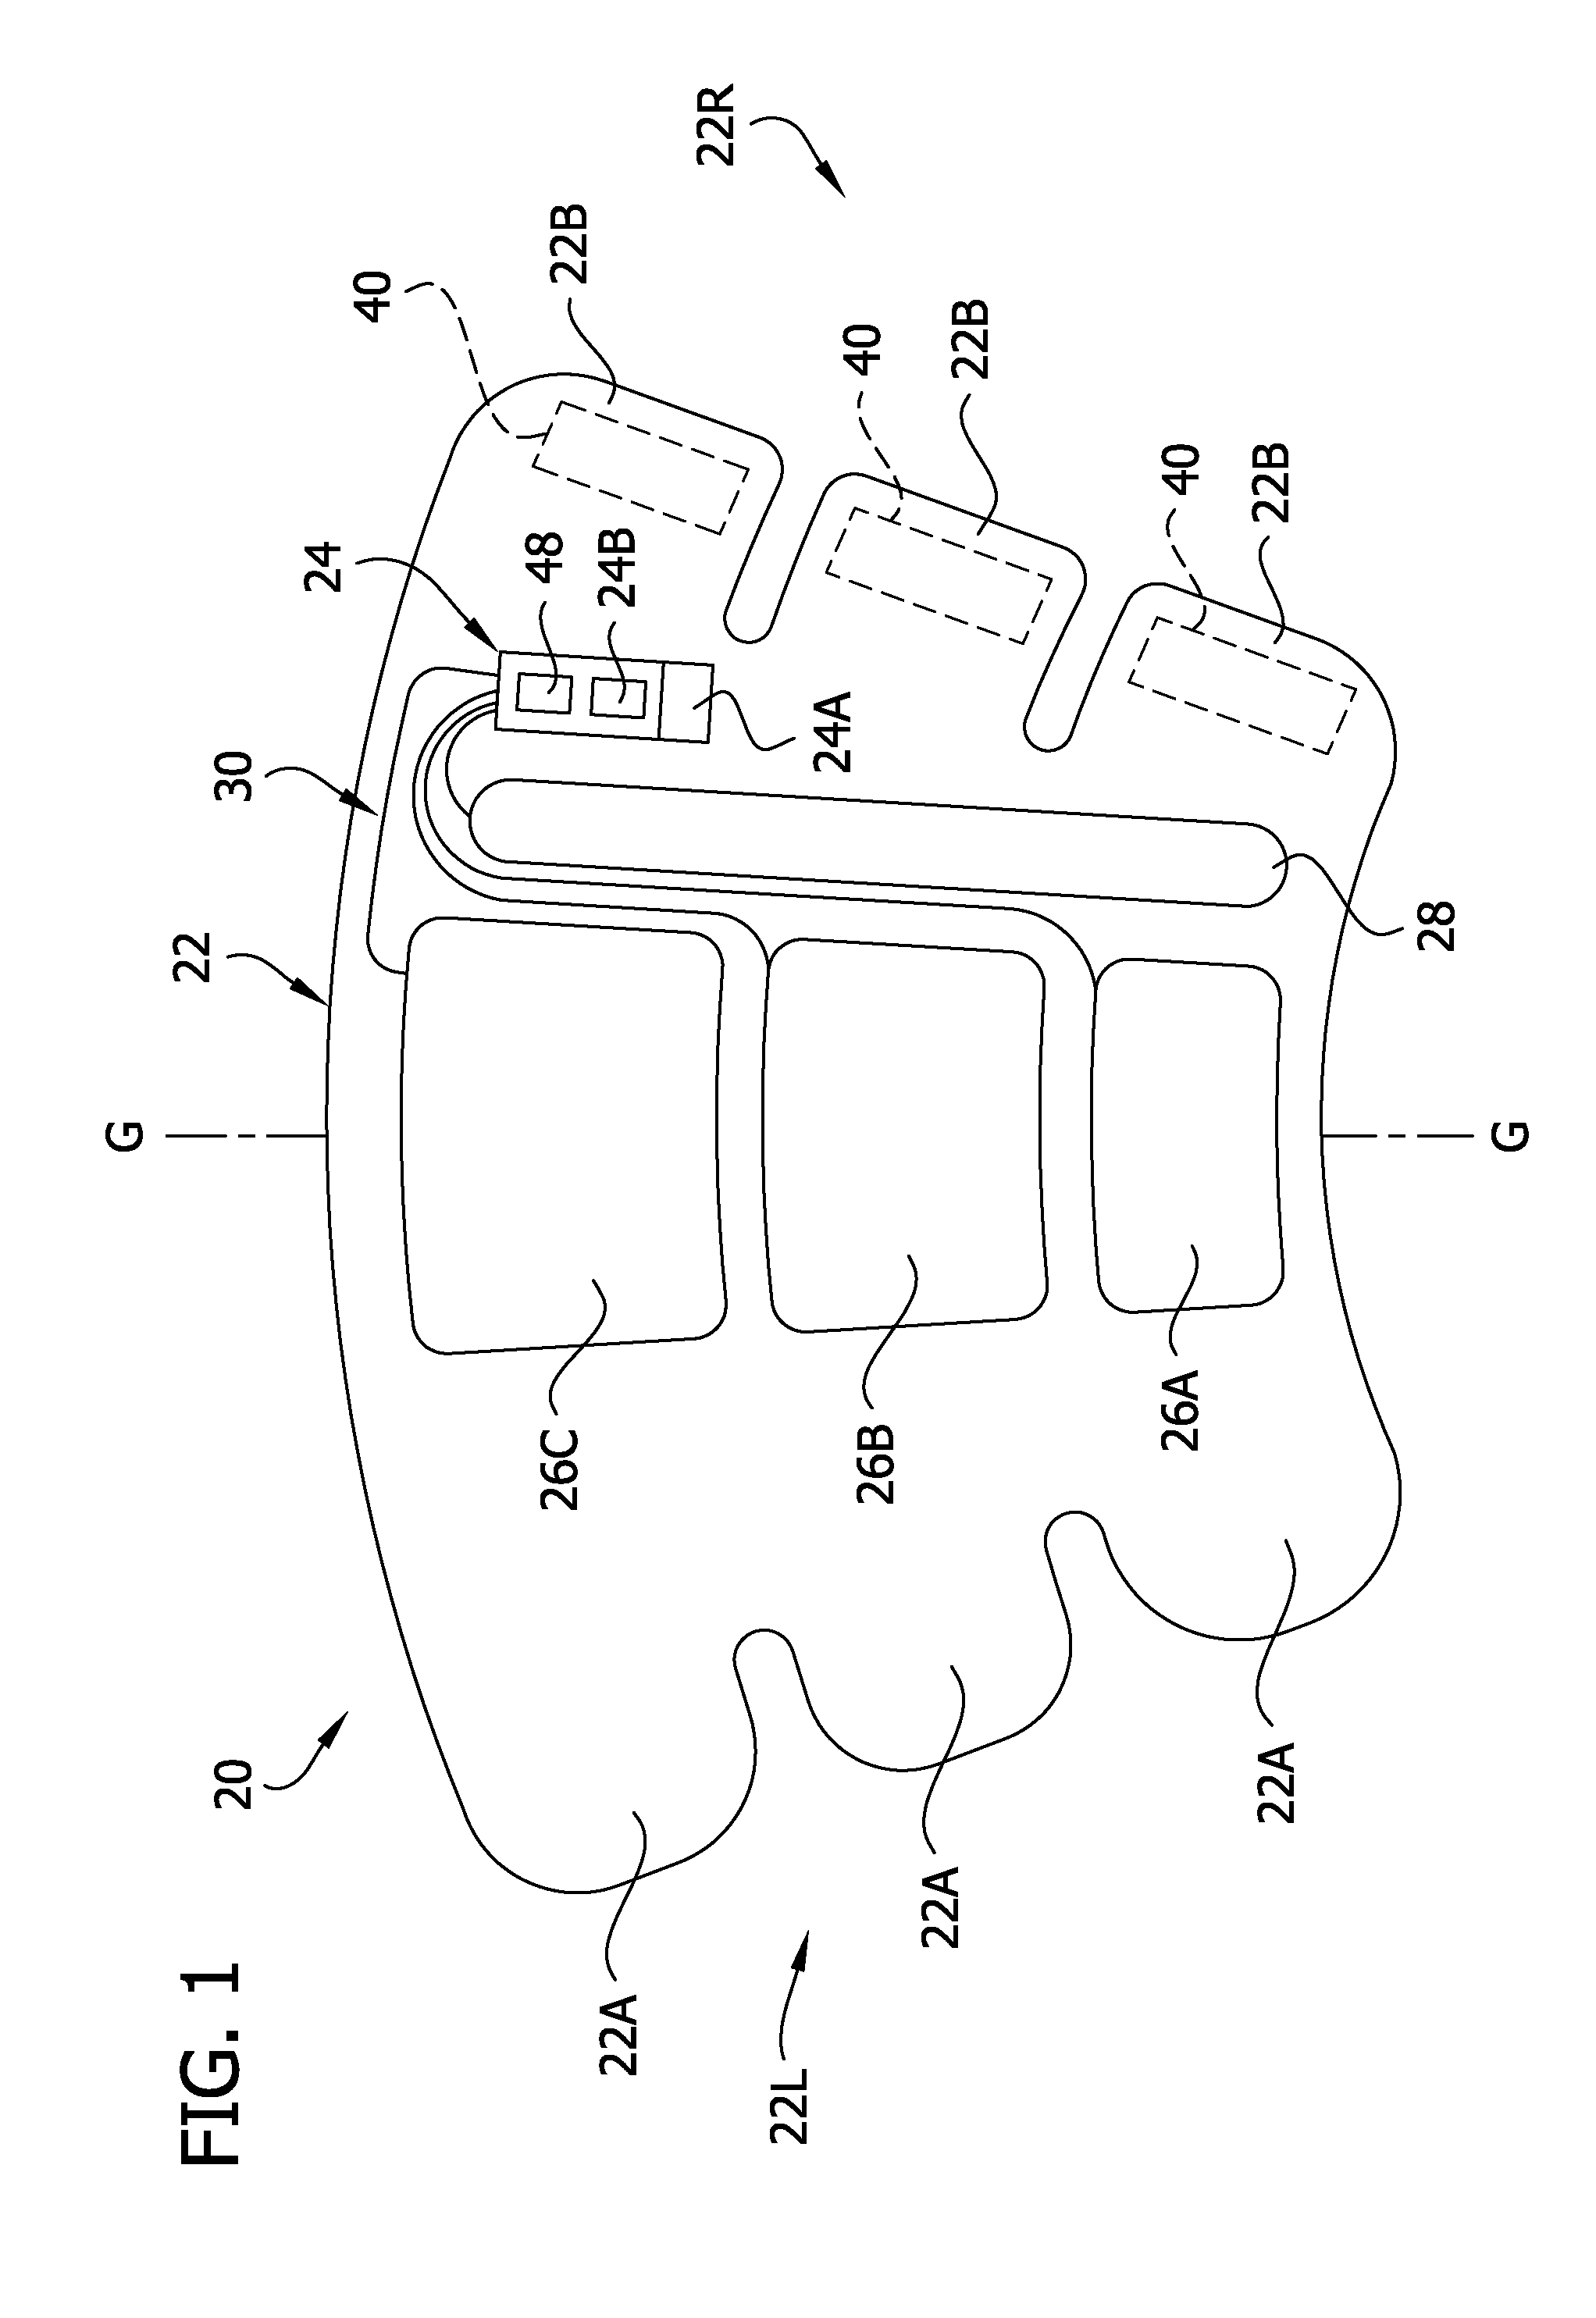 Compression garment apparatus having support bladder